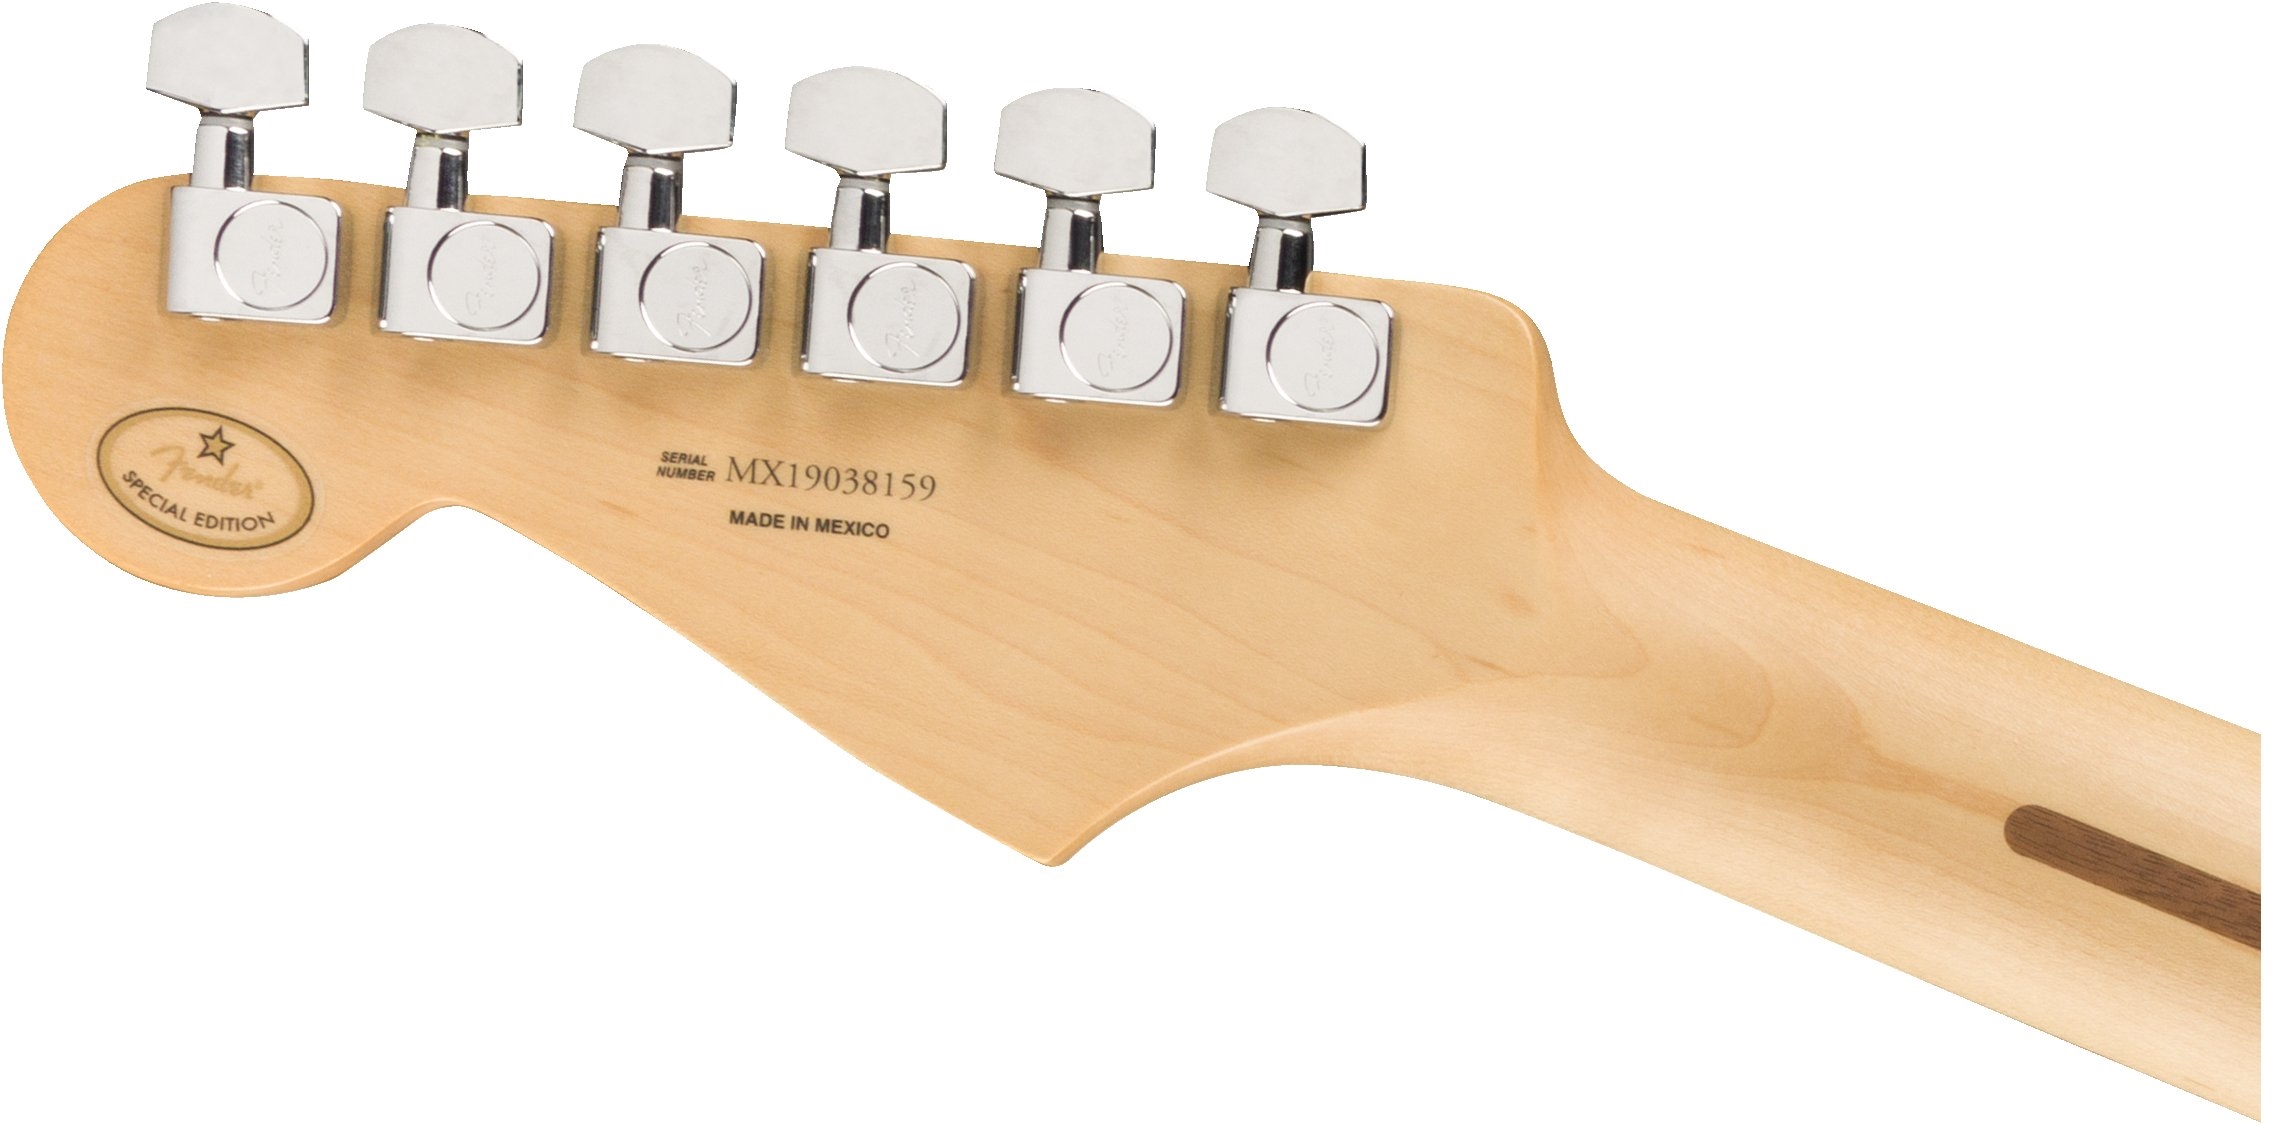 Fender Strat Player Ltd Mex 3s Trem Pf - Fiesta Red - Guitarra eléctrica con forma de str. - Variation 5